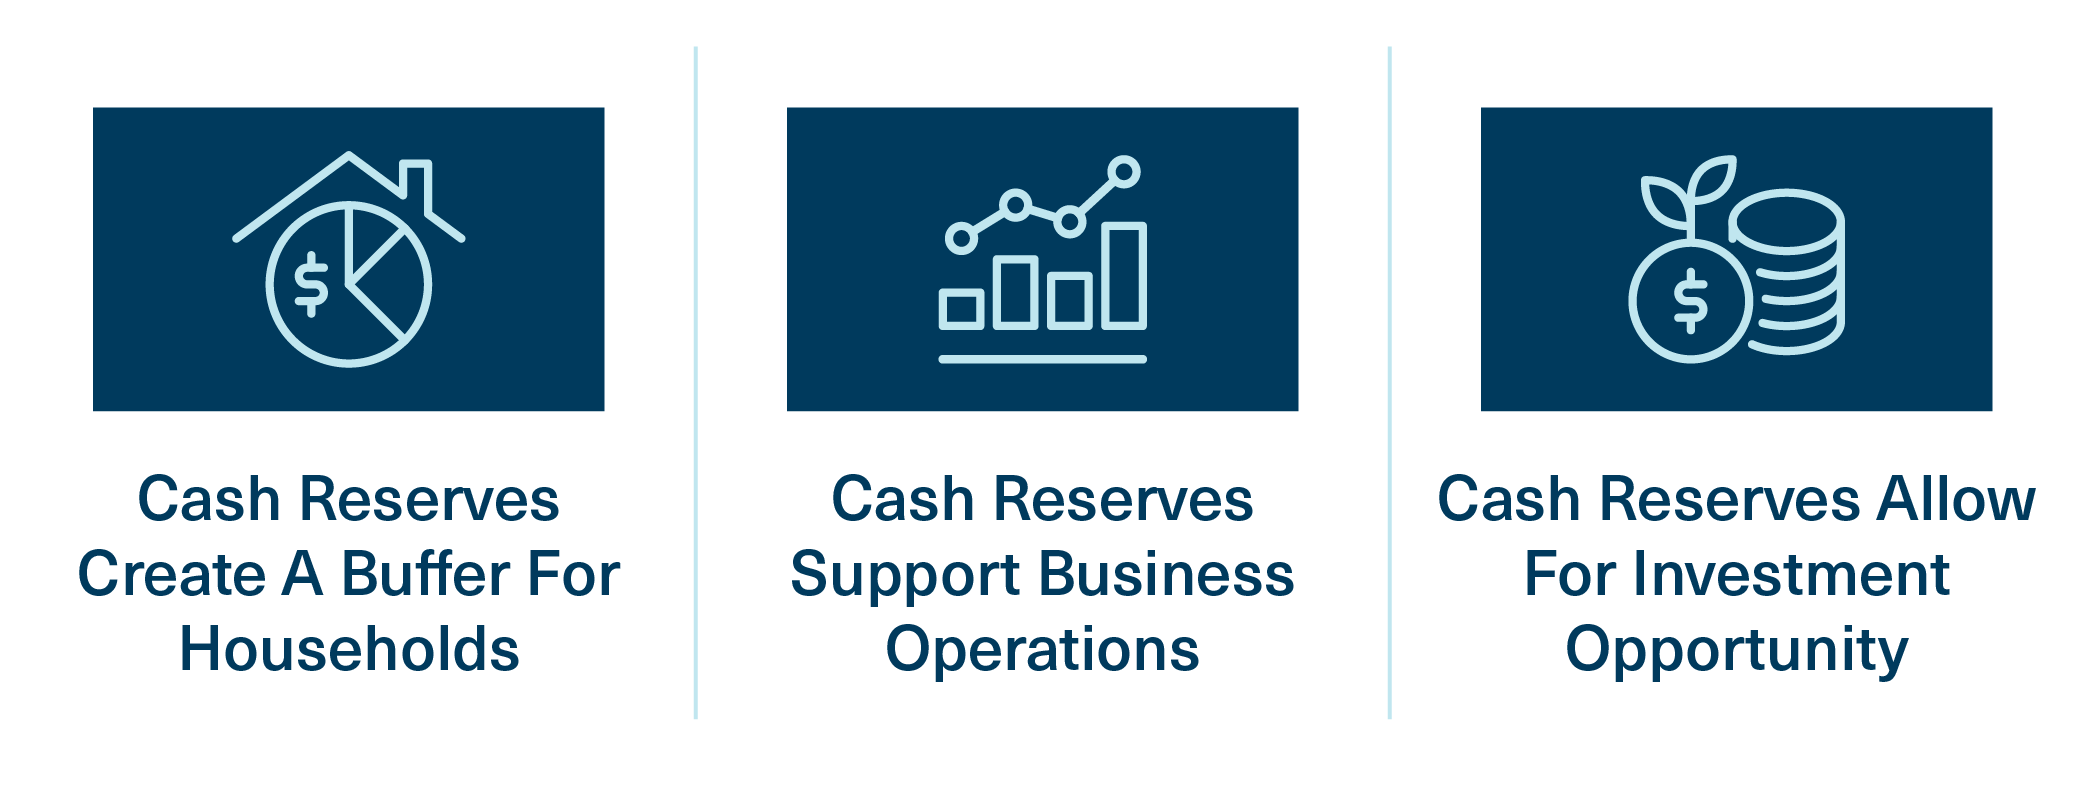 Cash Reserves Takeaways